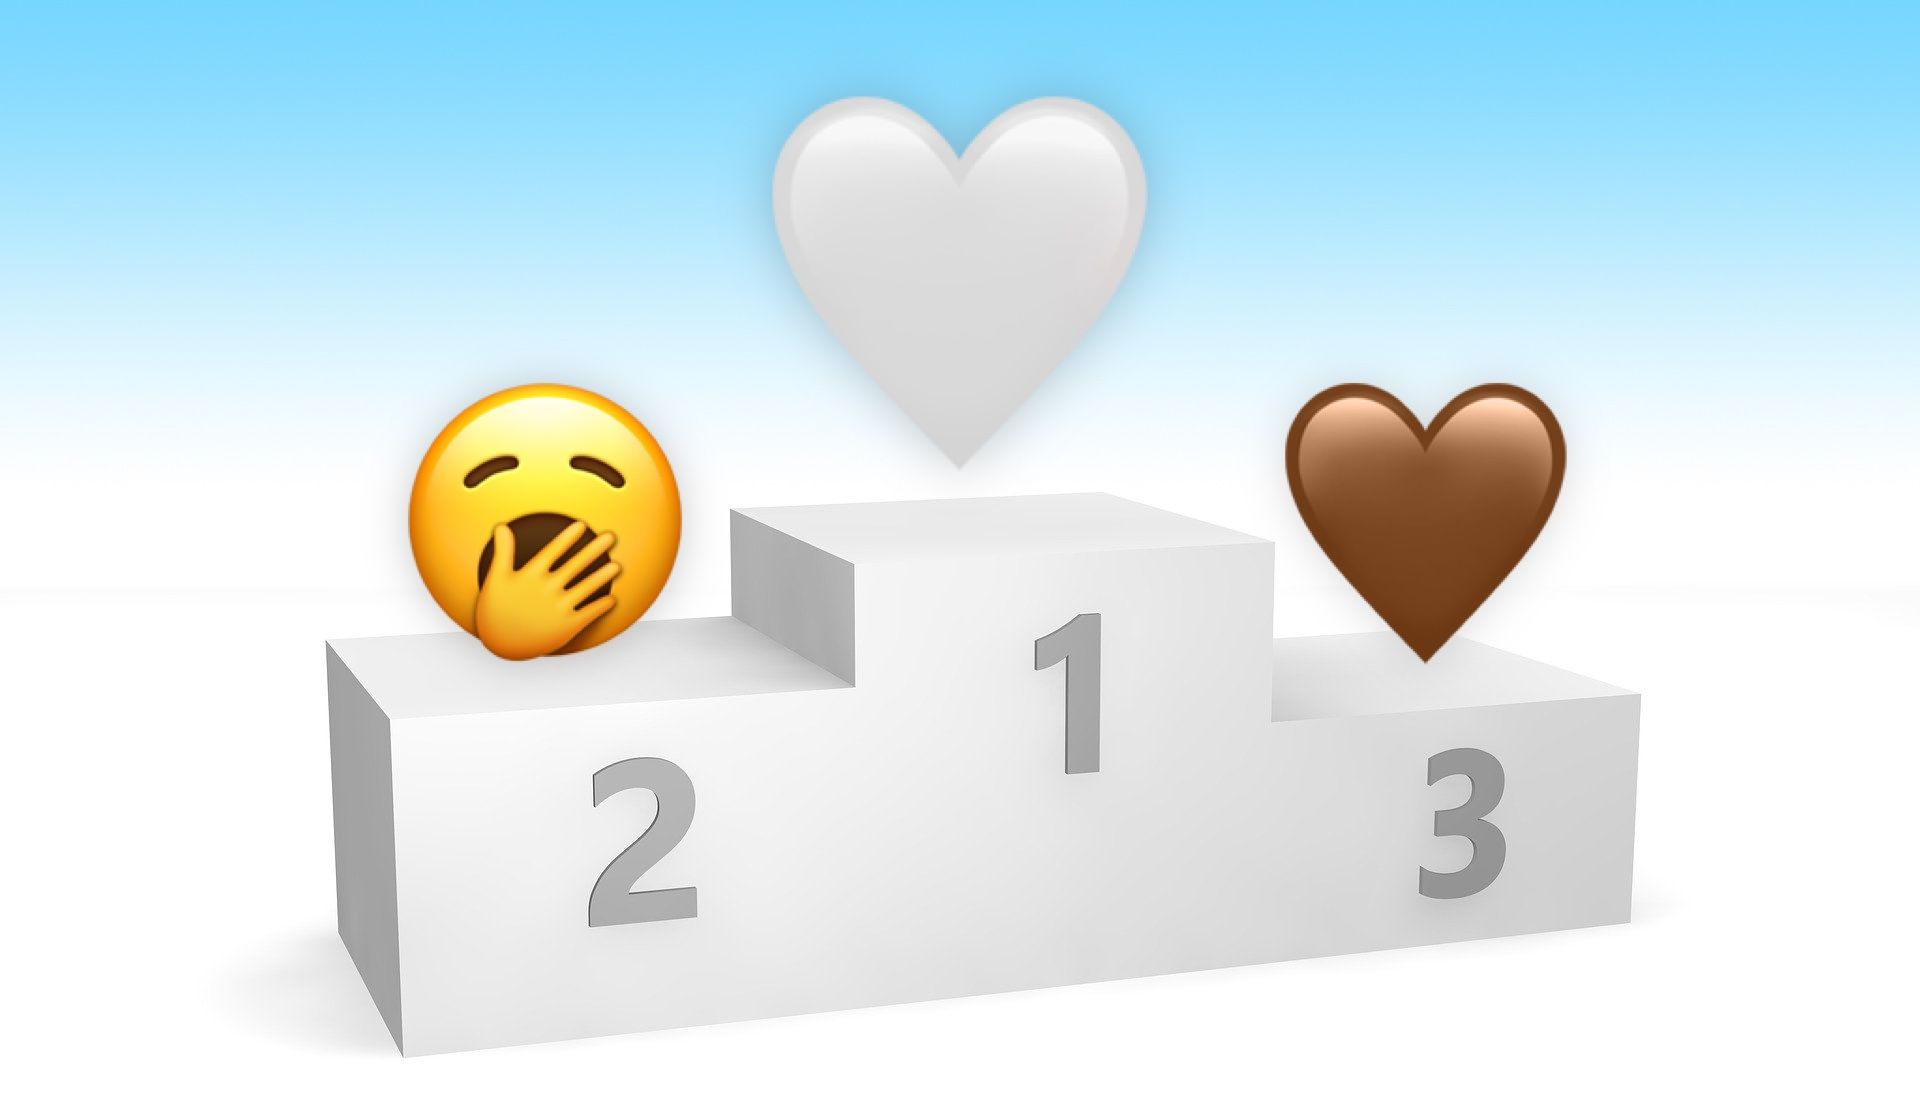 The Most Popular New Emoji Is